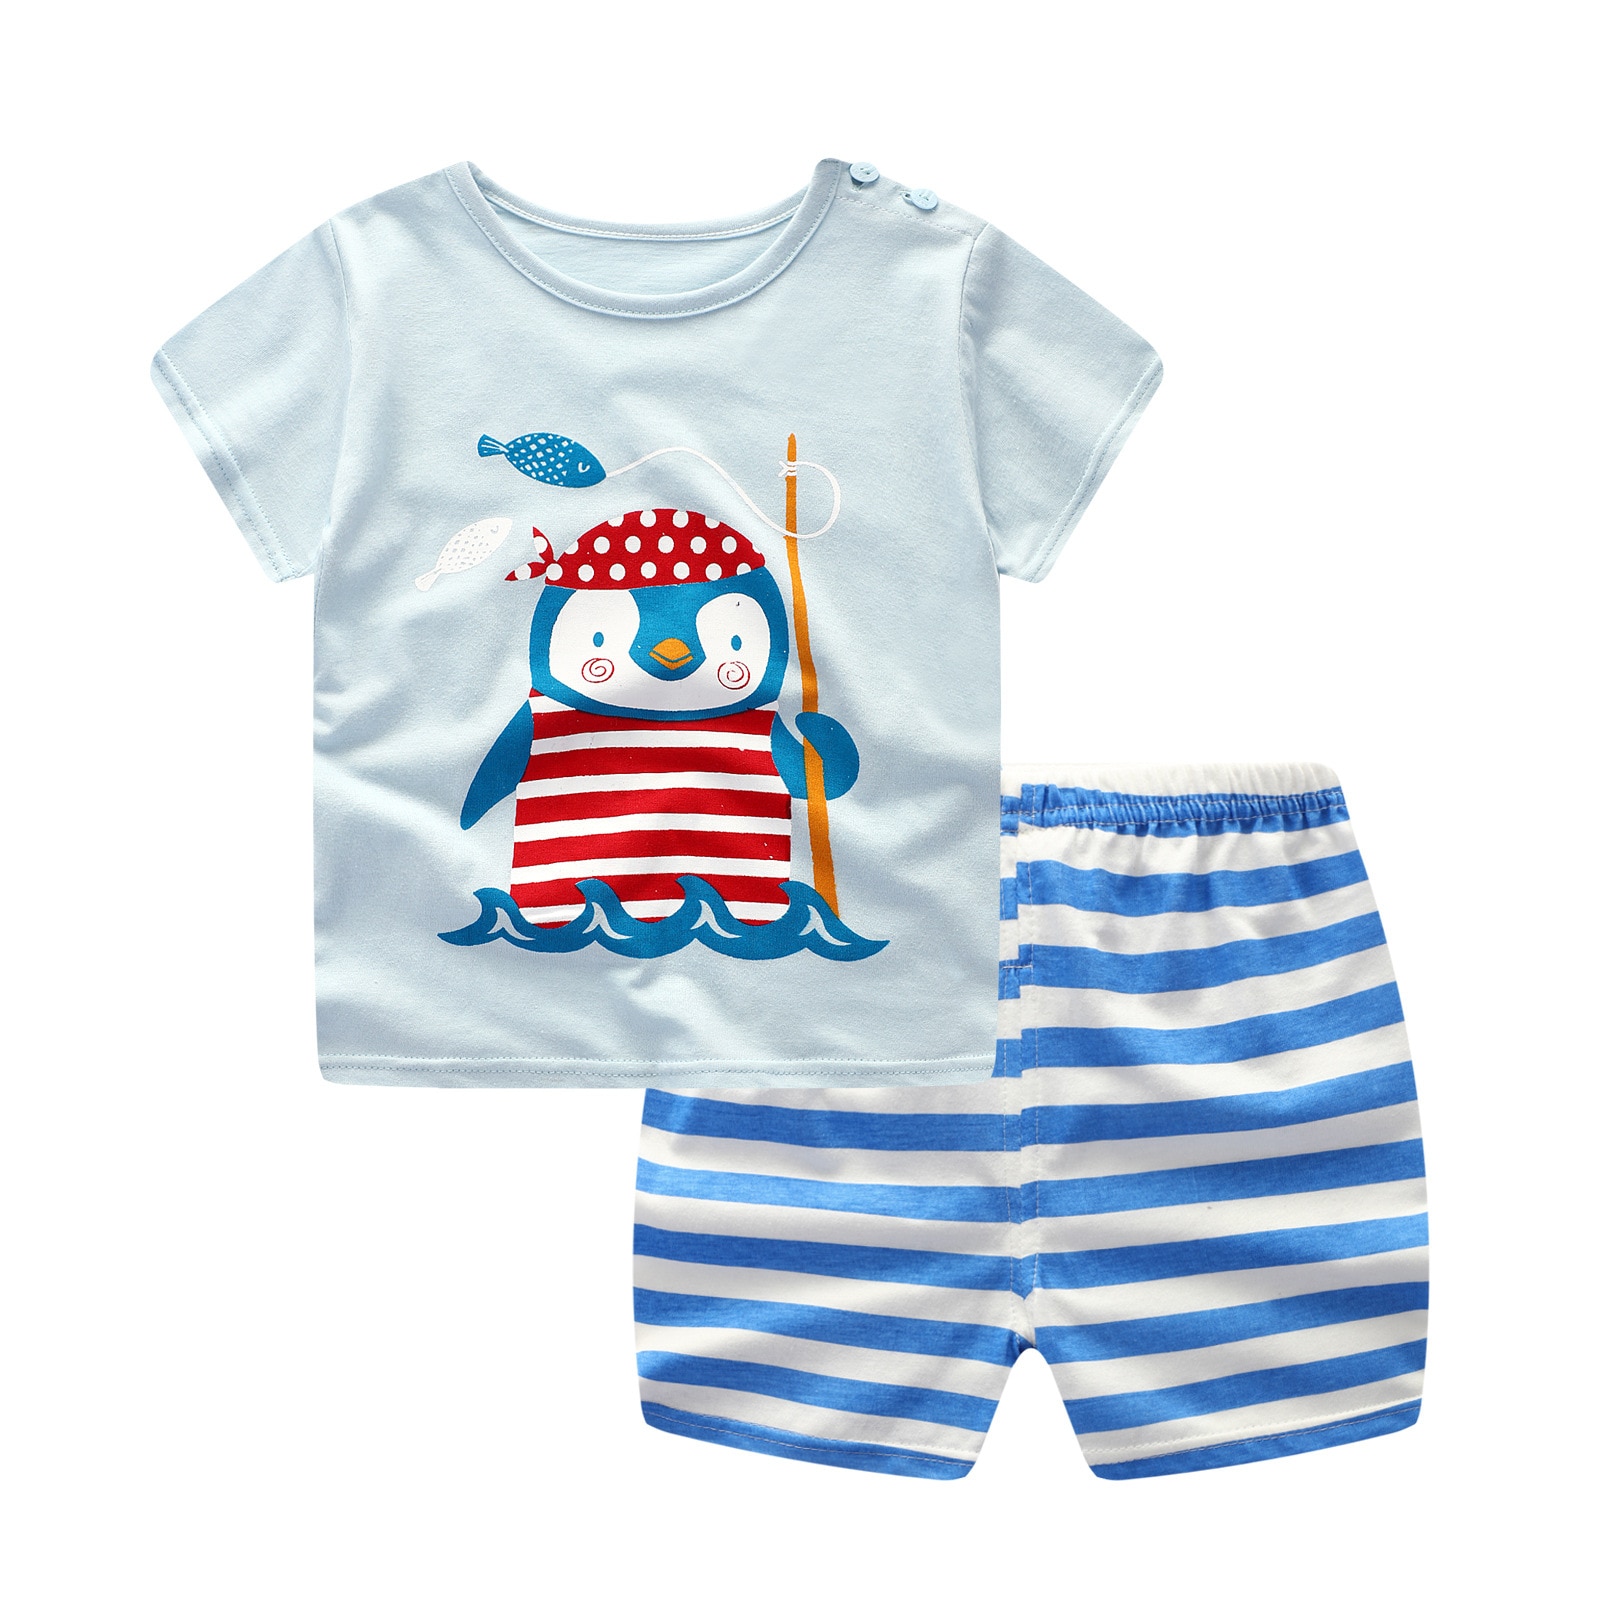 Unini-yun 2019 Summer Baby Boy Clothes Newborn Striped Cartoon Monkey Tshirt + Shorts Set Girls Baby Clothing Newborn Clothes